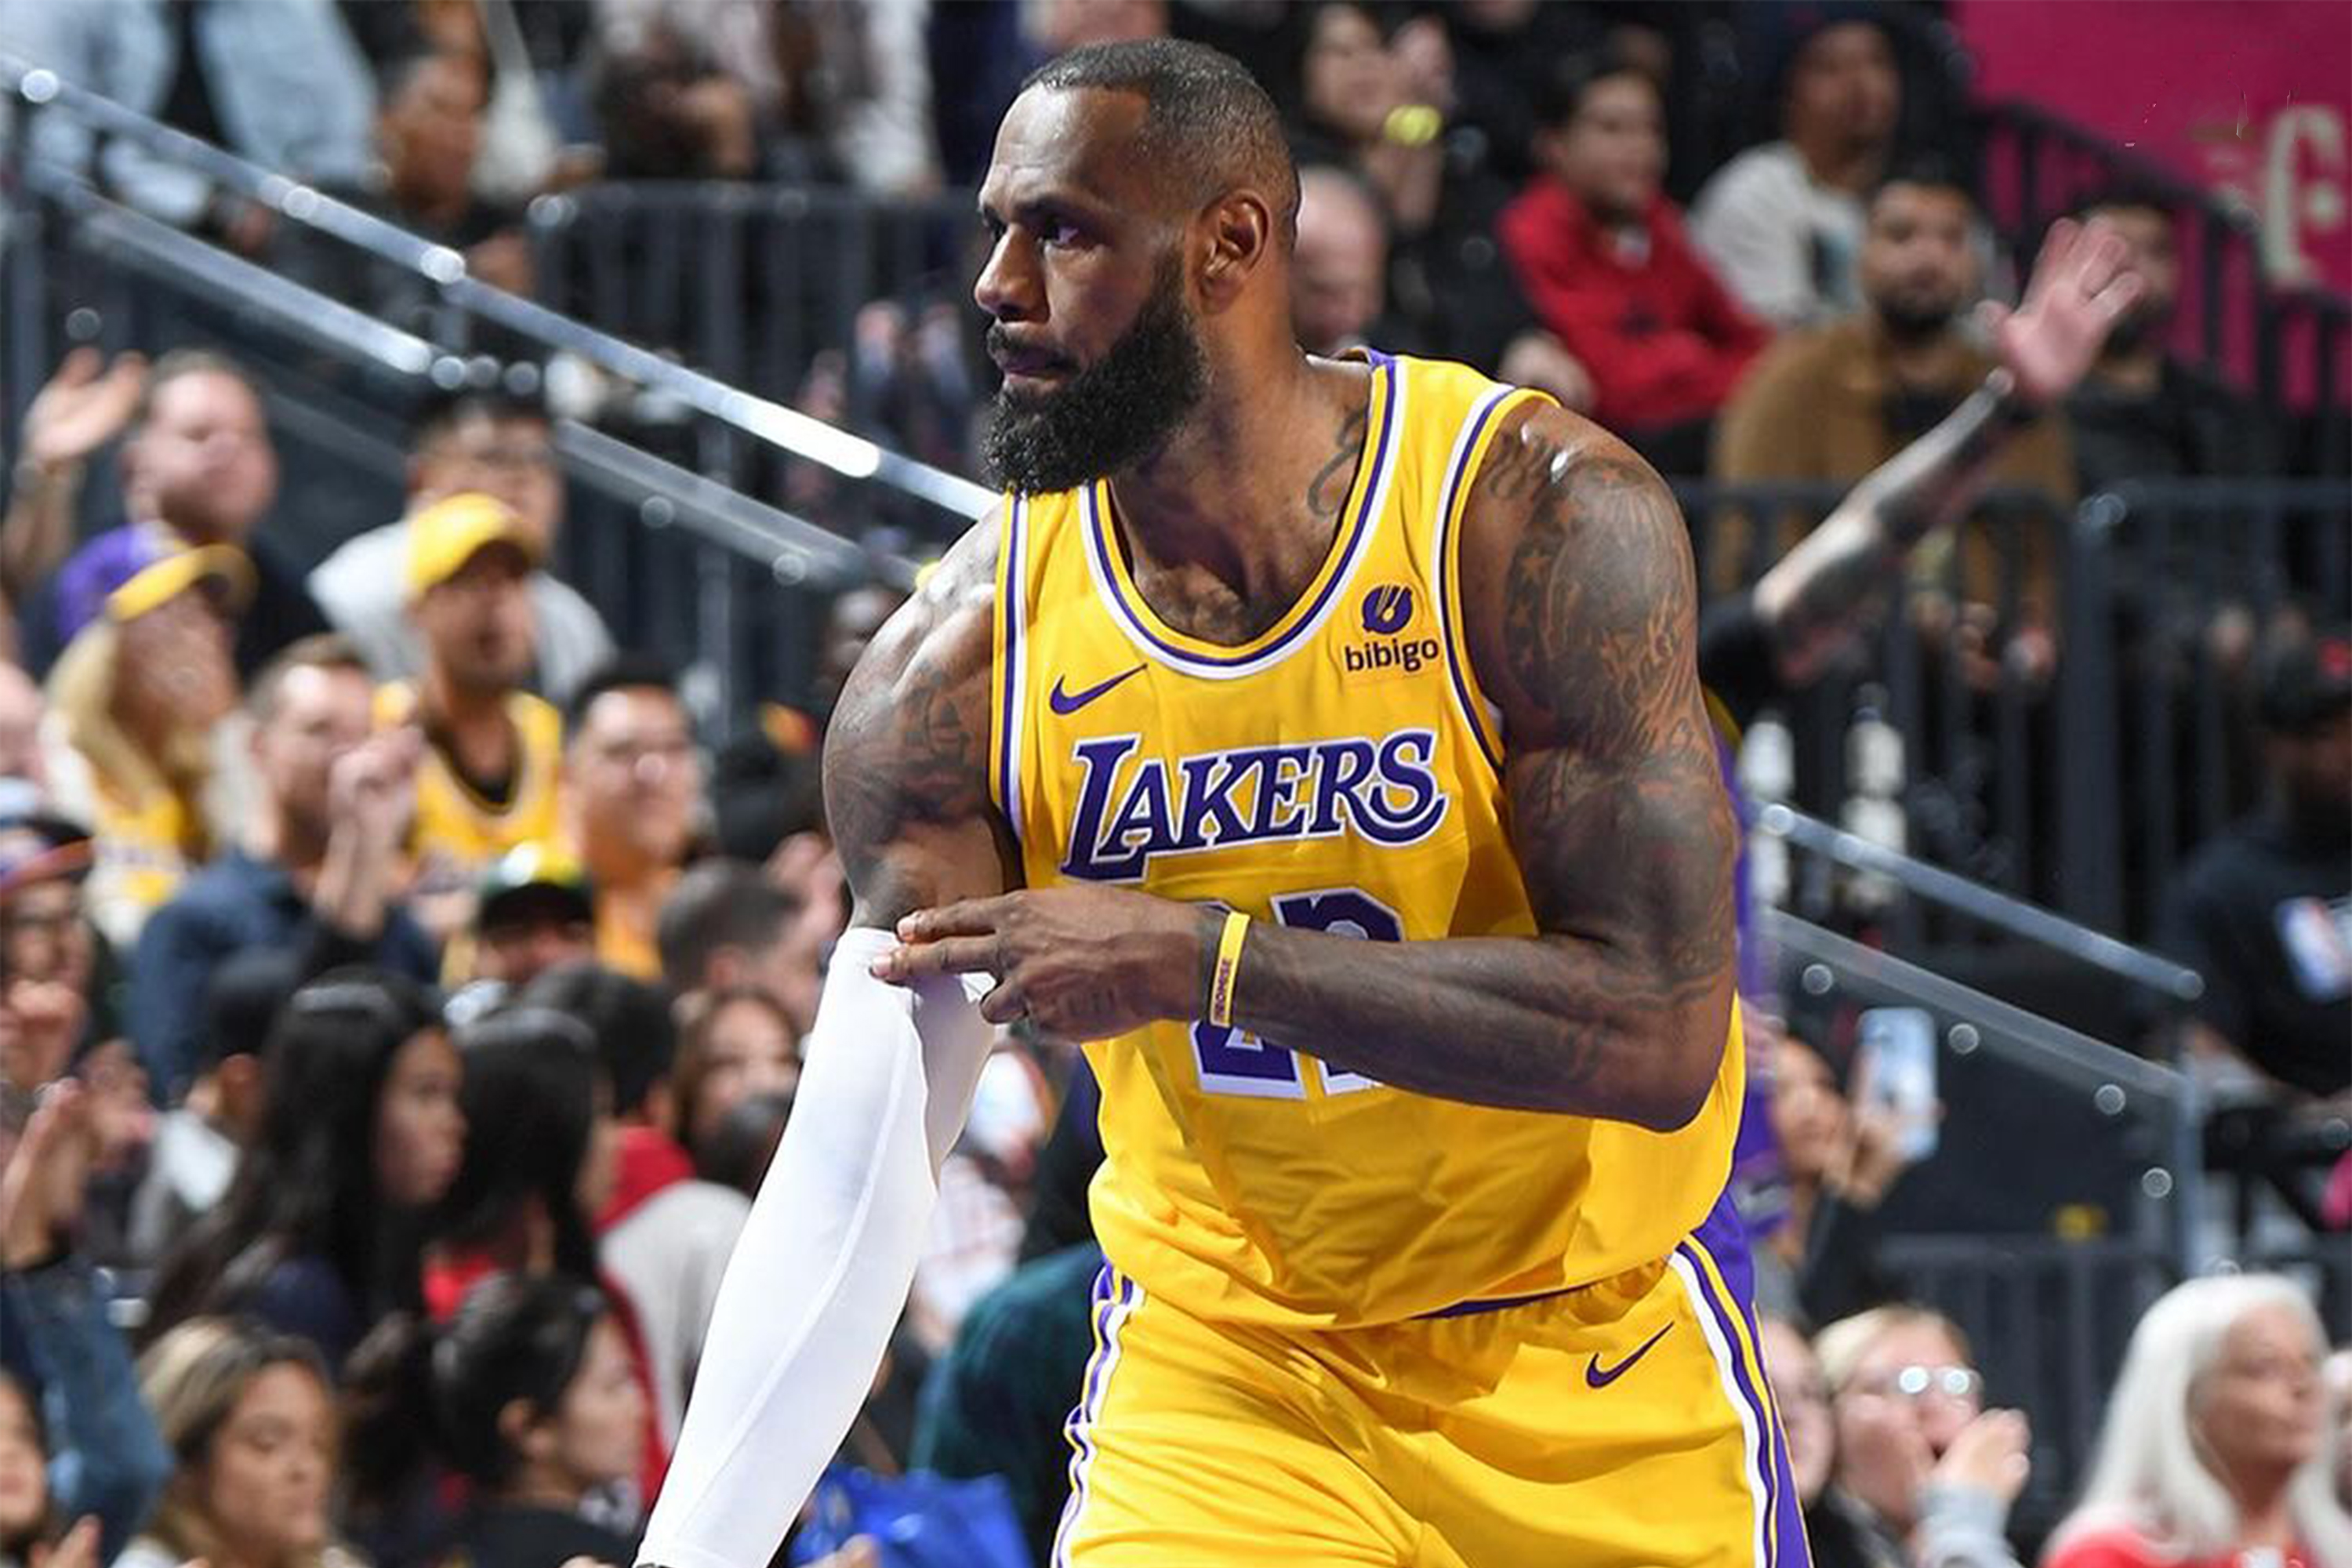 LeBron scores 30 Lakers Advance to In Season Tournament Finals